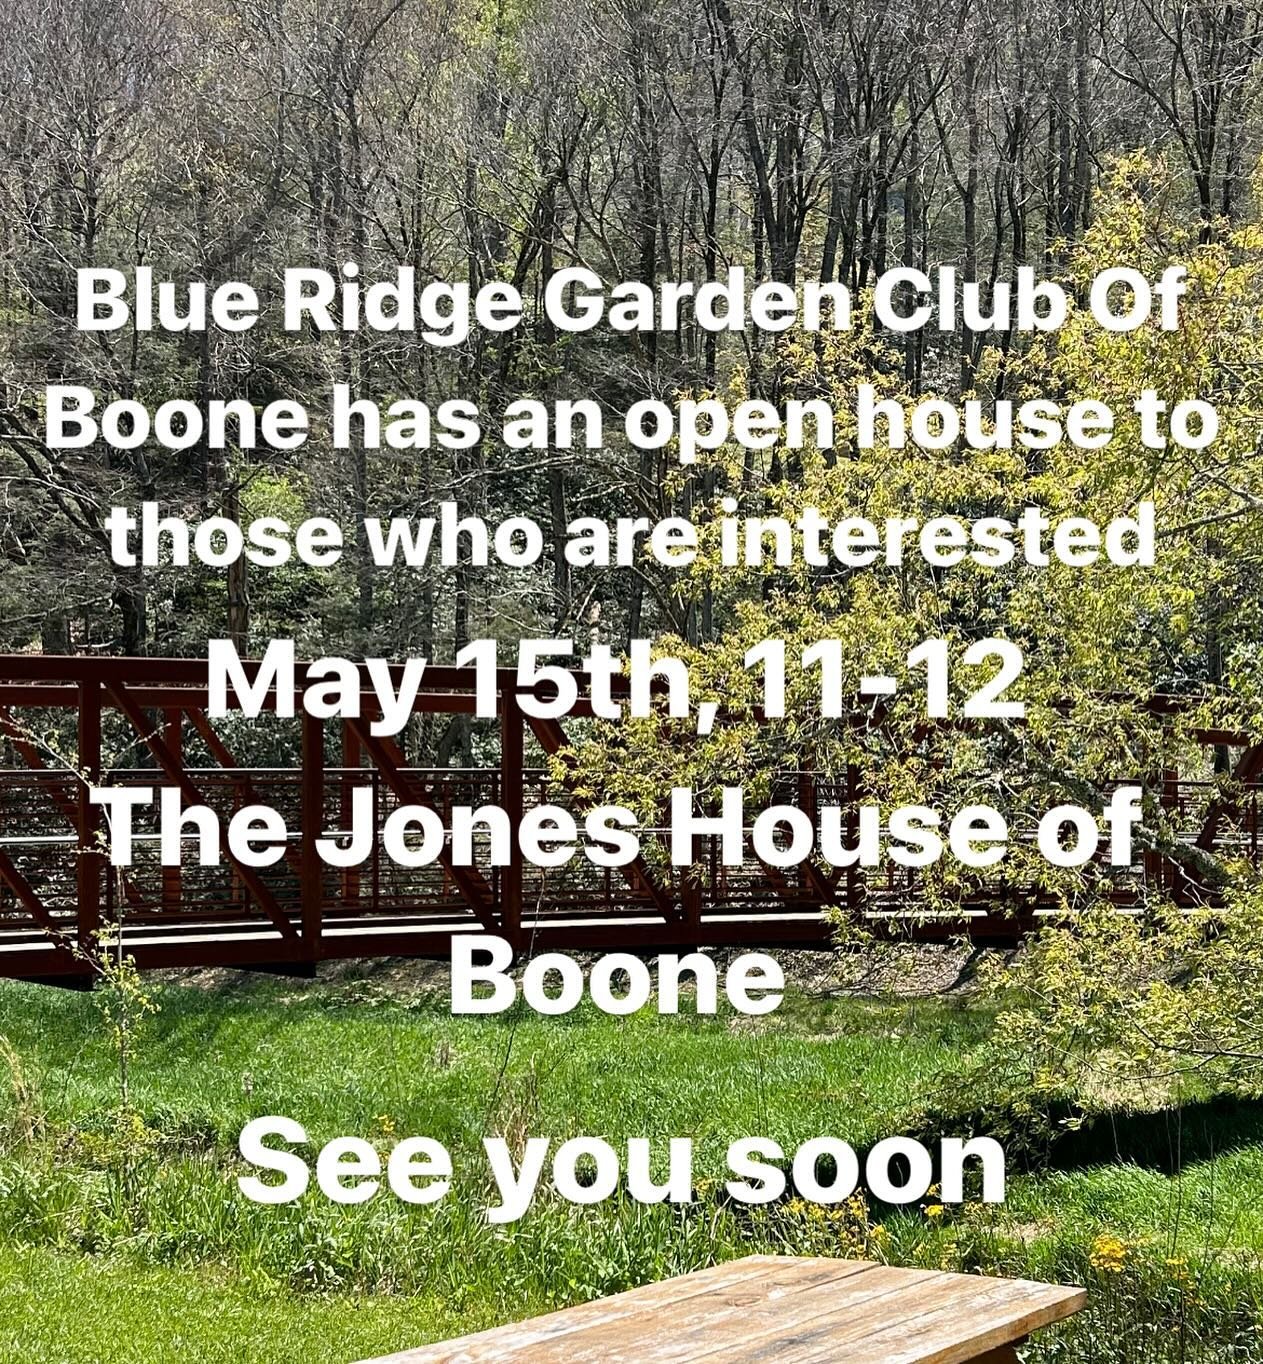 We would love to meet any fellow gardeners on May 15th. #boone #boonenc #boonenorthcarolina #boonegarden #wataugacounty #828